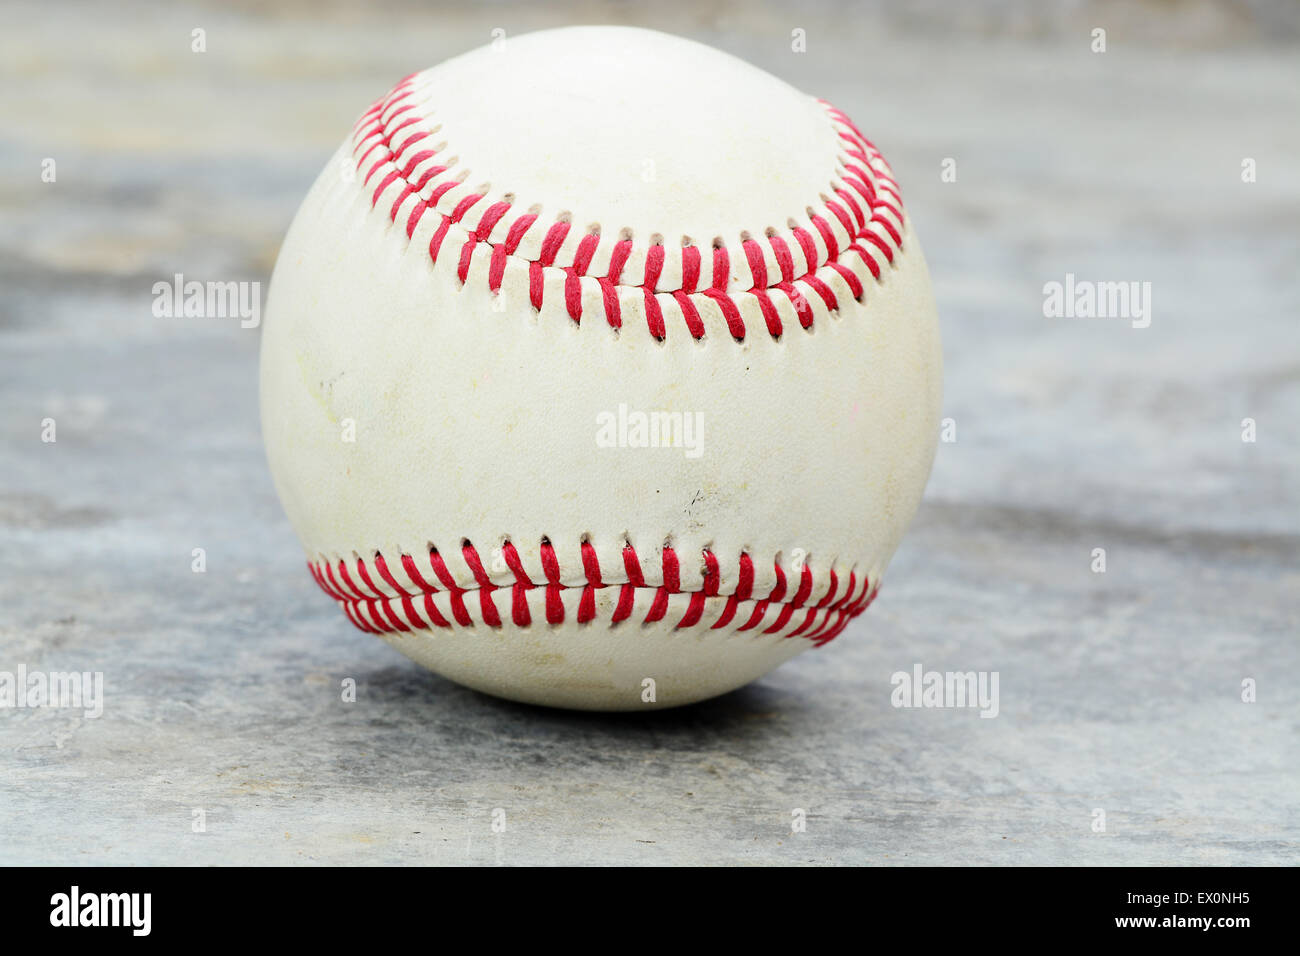 Casco de béisbol en un fondo de hormigón gris Foto de stock